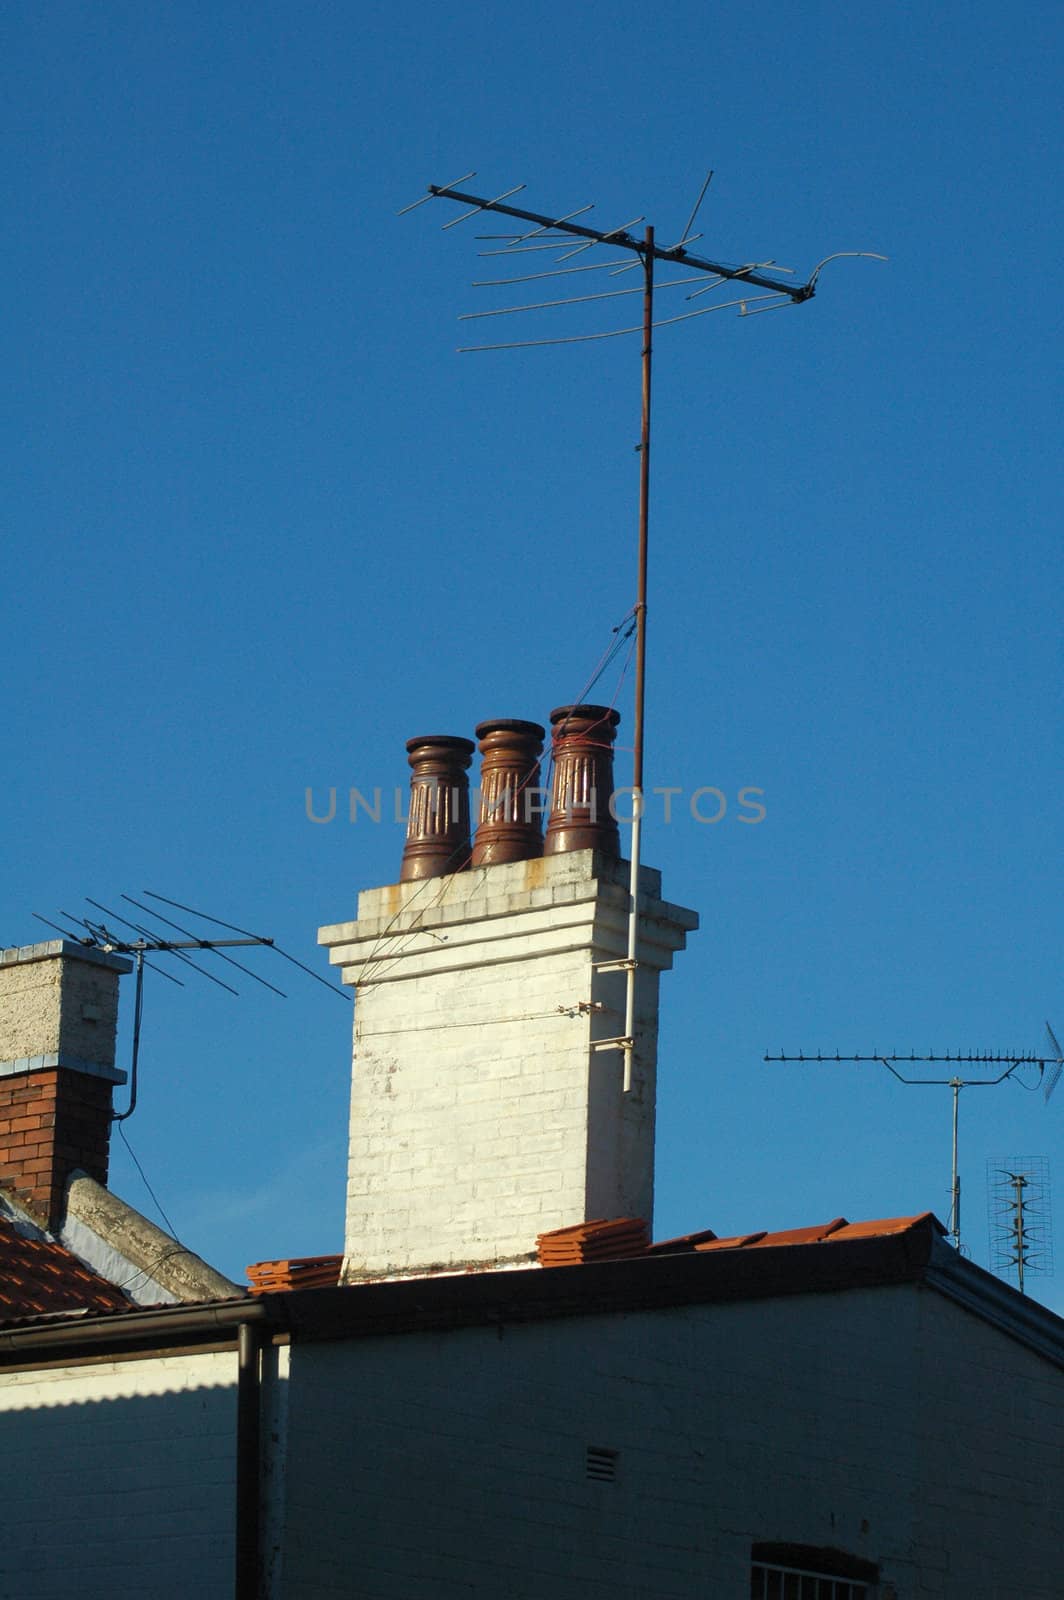 roof detail, old chimney made of bricks, four televison antennas 